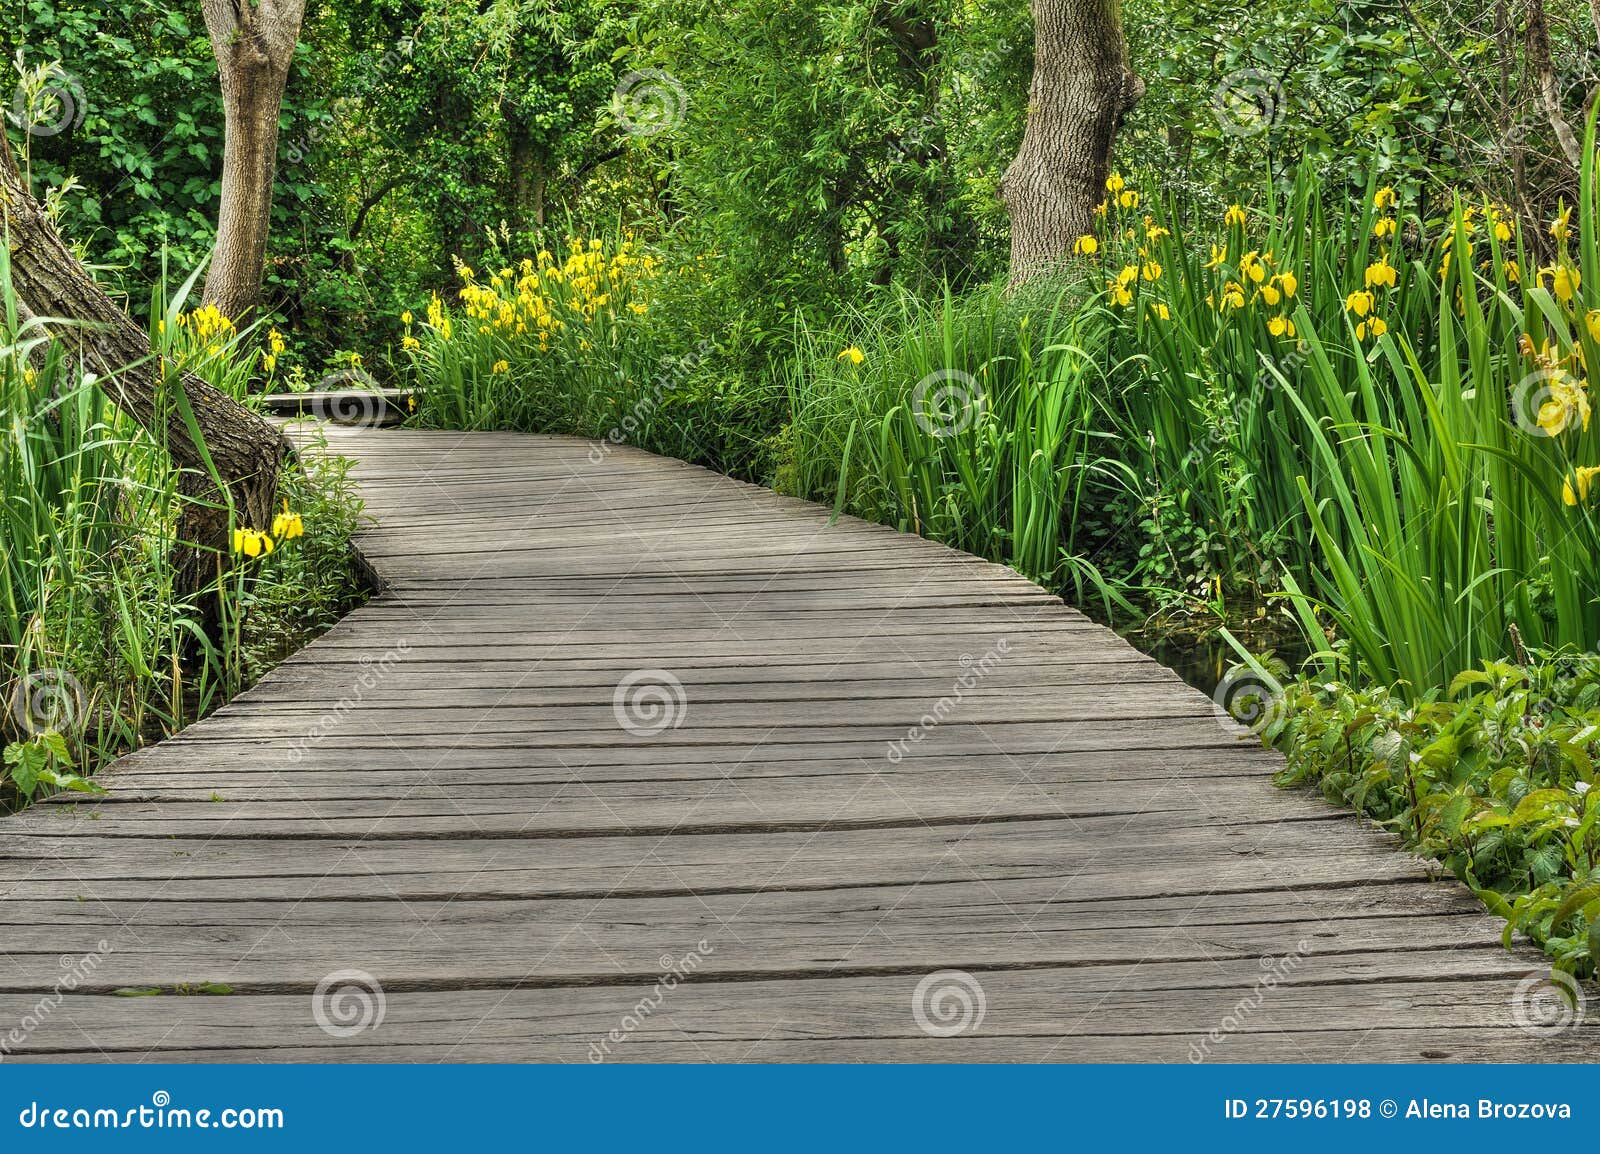 footbridge in krka national park, croatia,